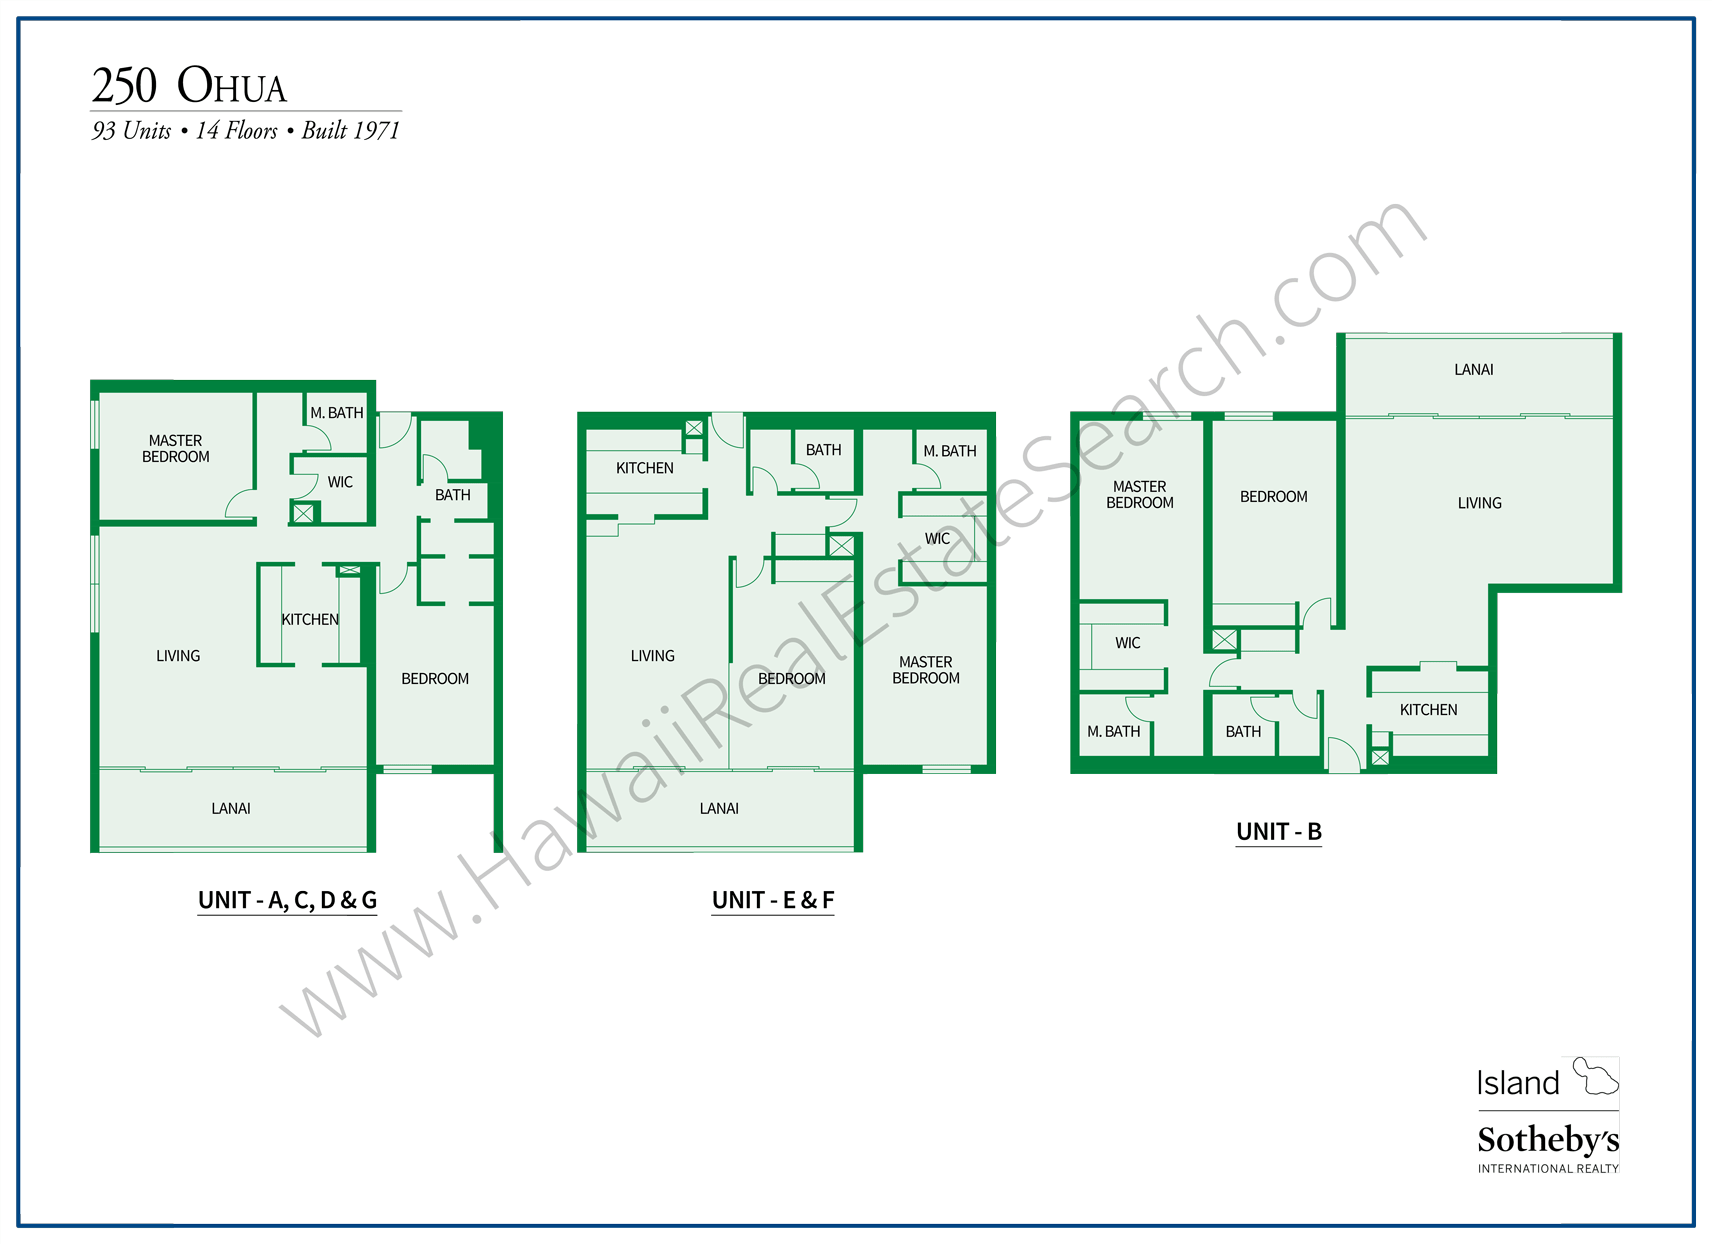 250 Ohua Floor Plans